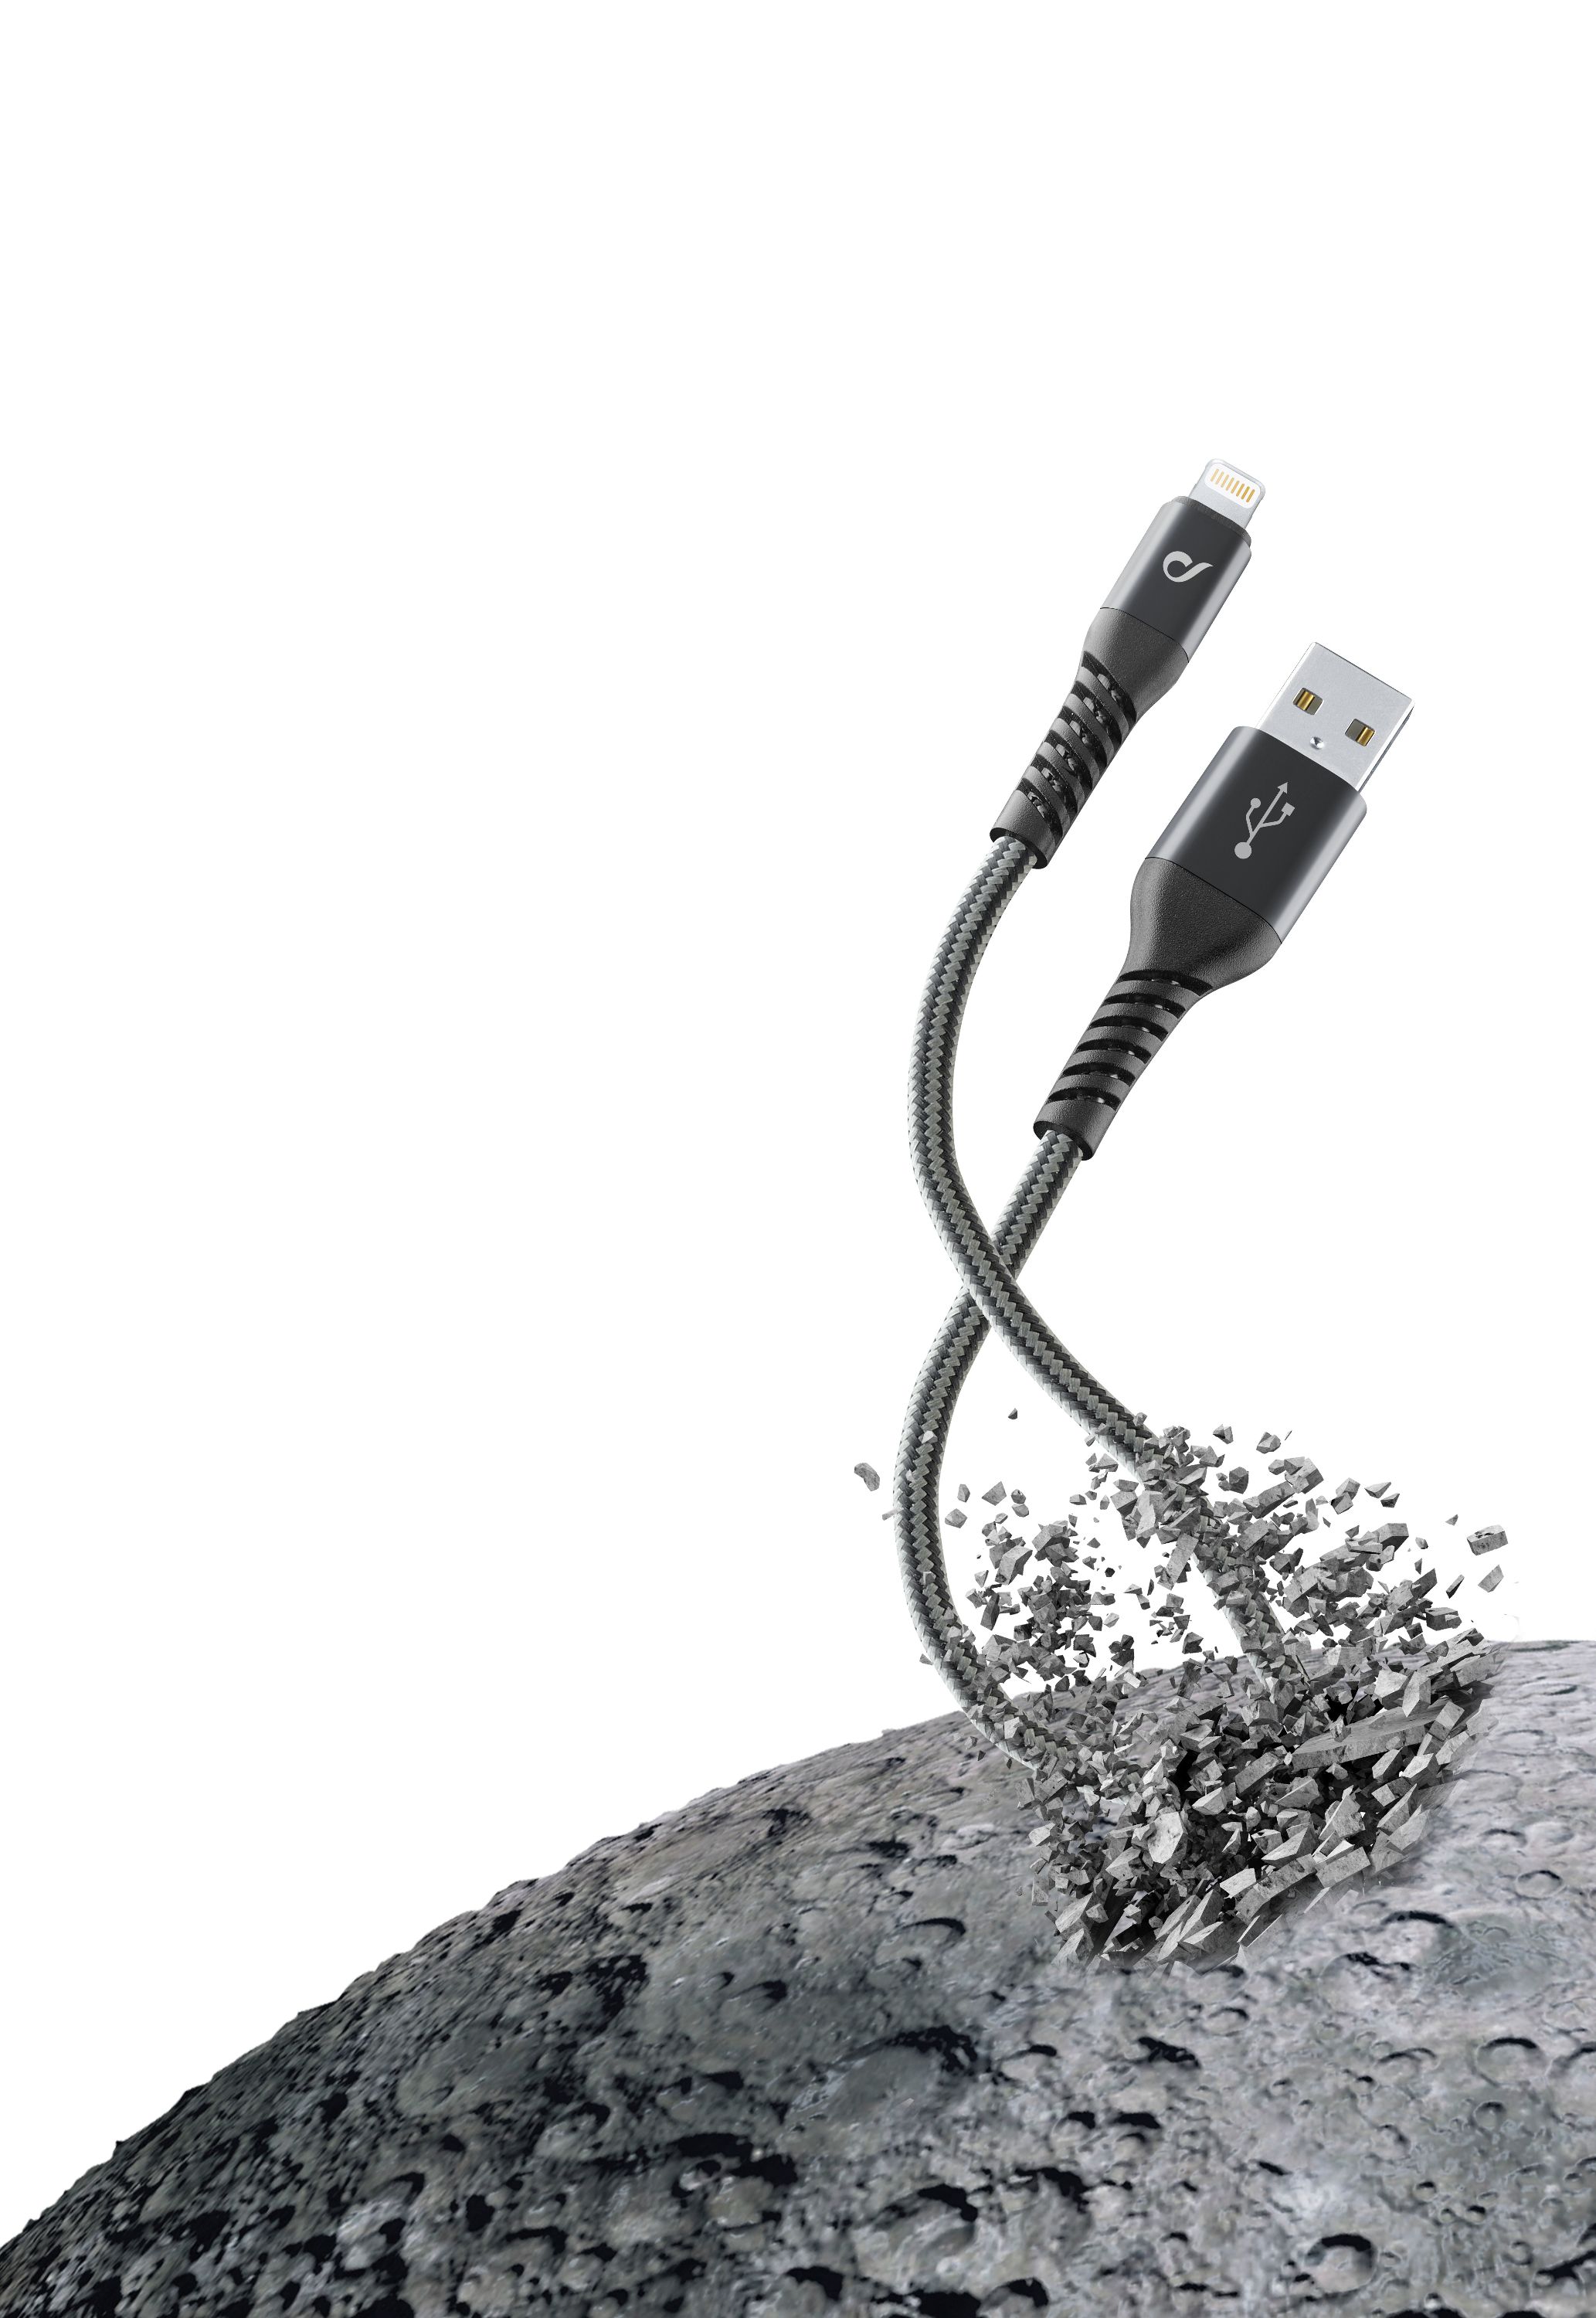 Usb kabel, kevlar Apple lightning 2m, zwart